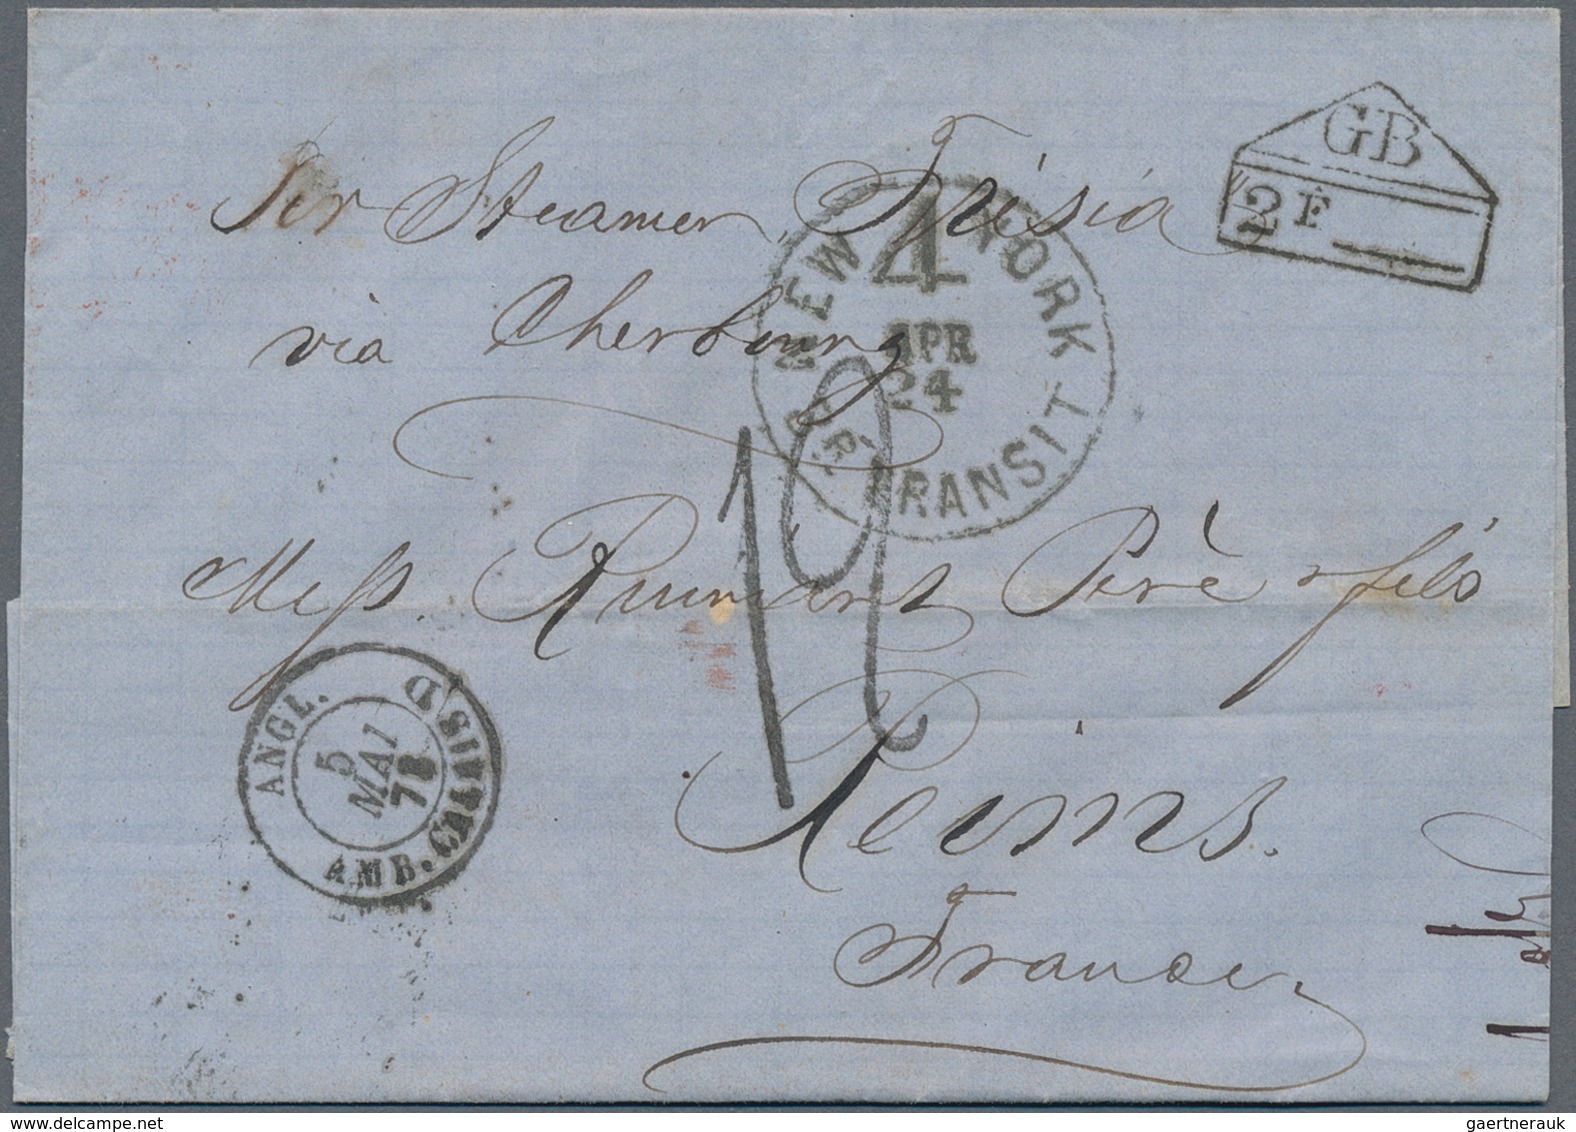 Vereinigte Staaten von Amerika: 1838/1933: Lot of 28 envelopes and postal stationeries including pre